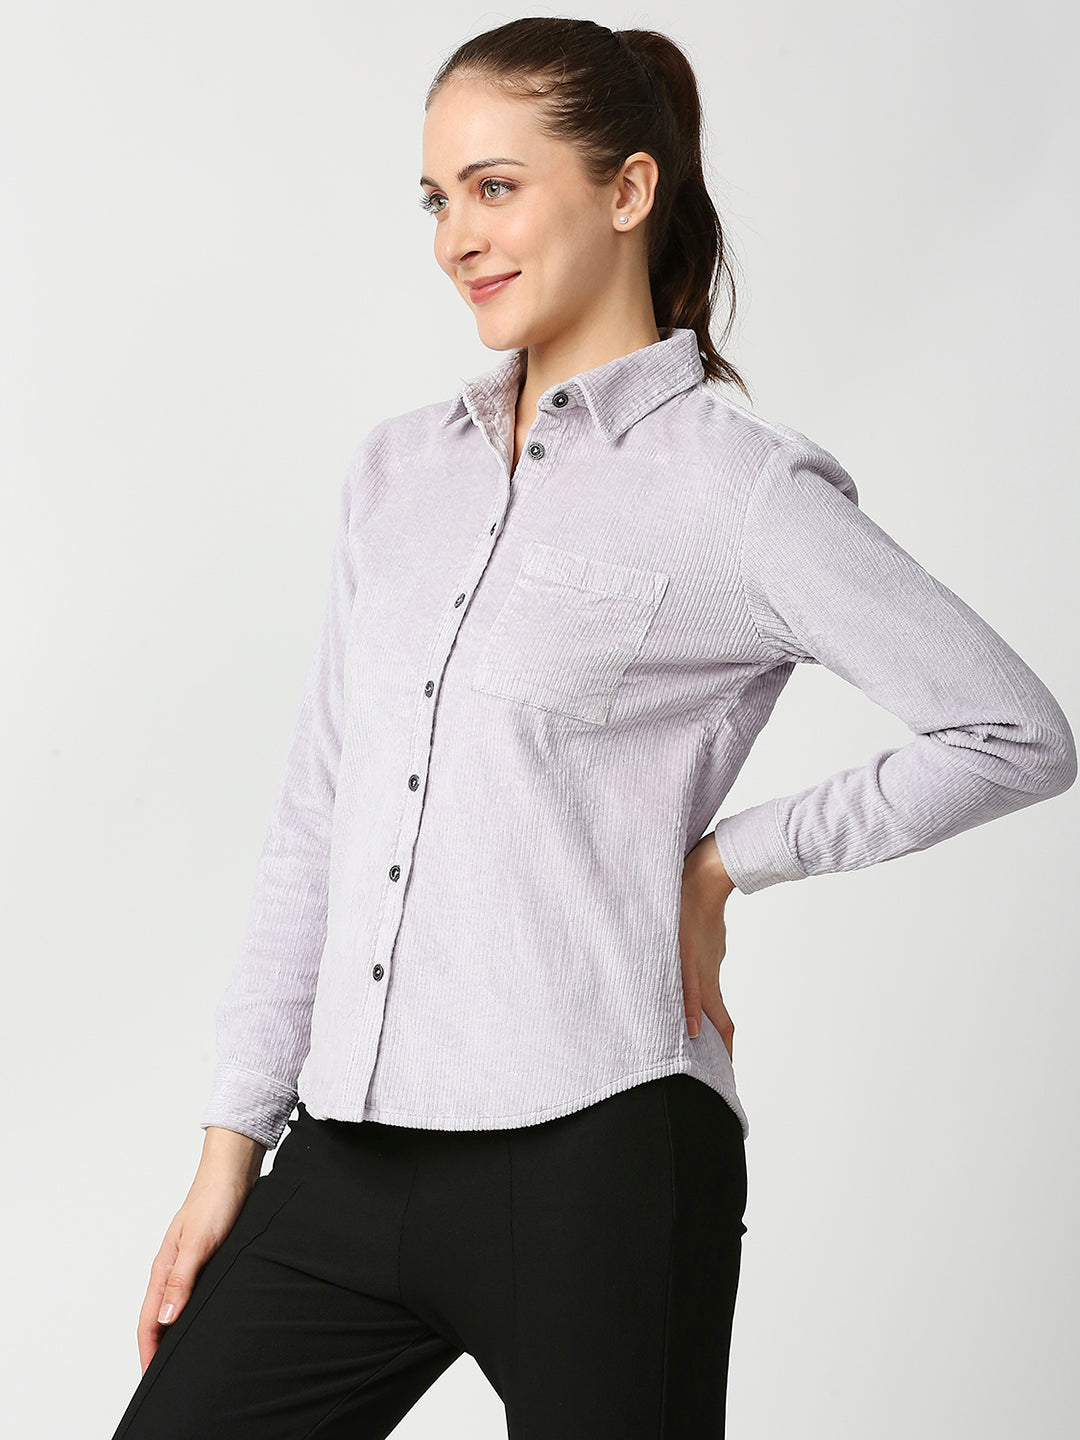 Buy Blamblack Women's Lavender Color Full Sleeves Shirt